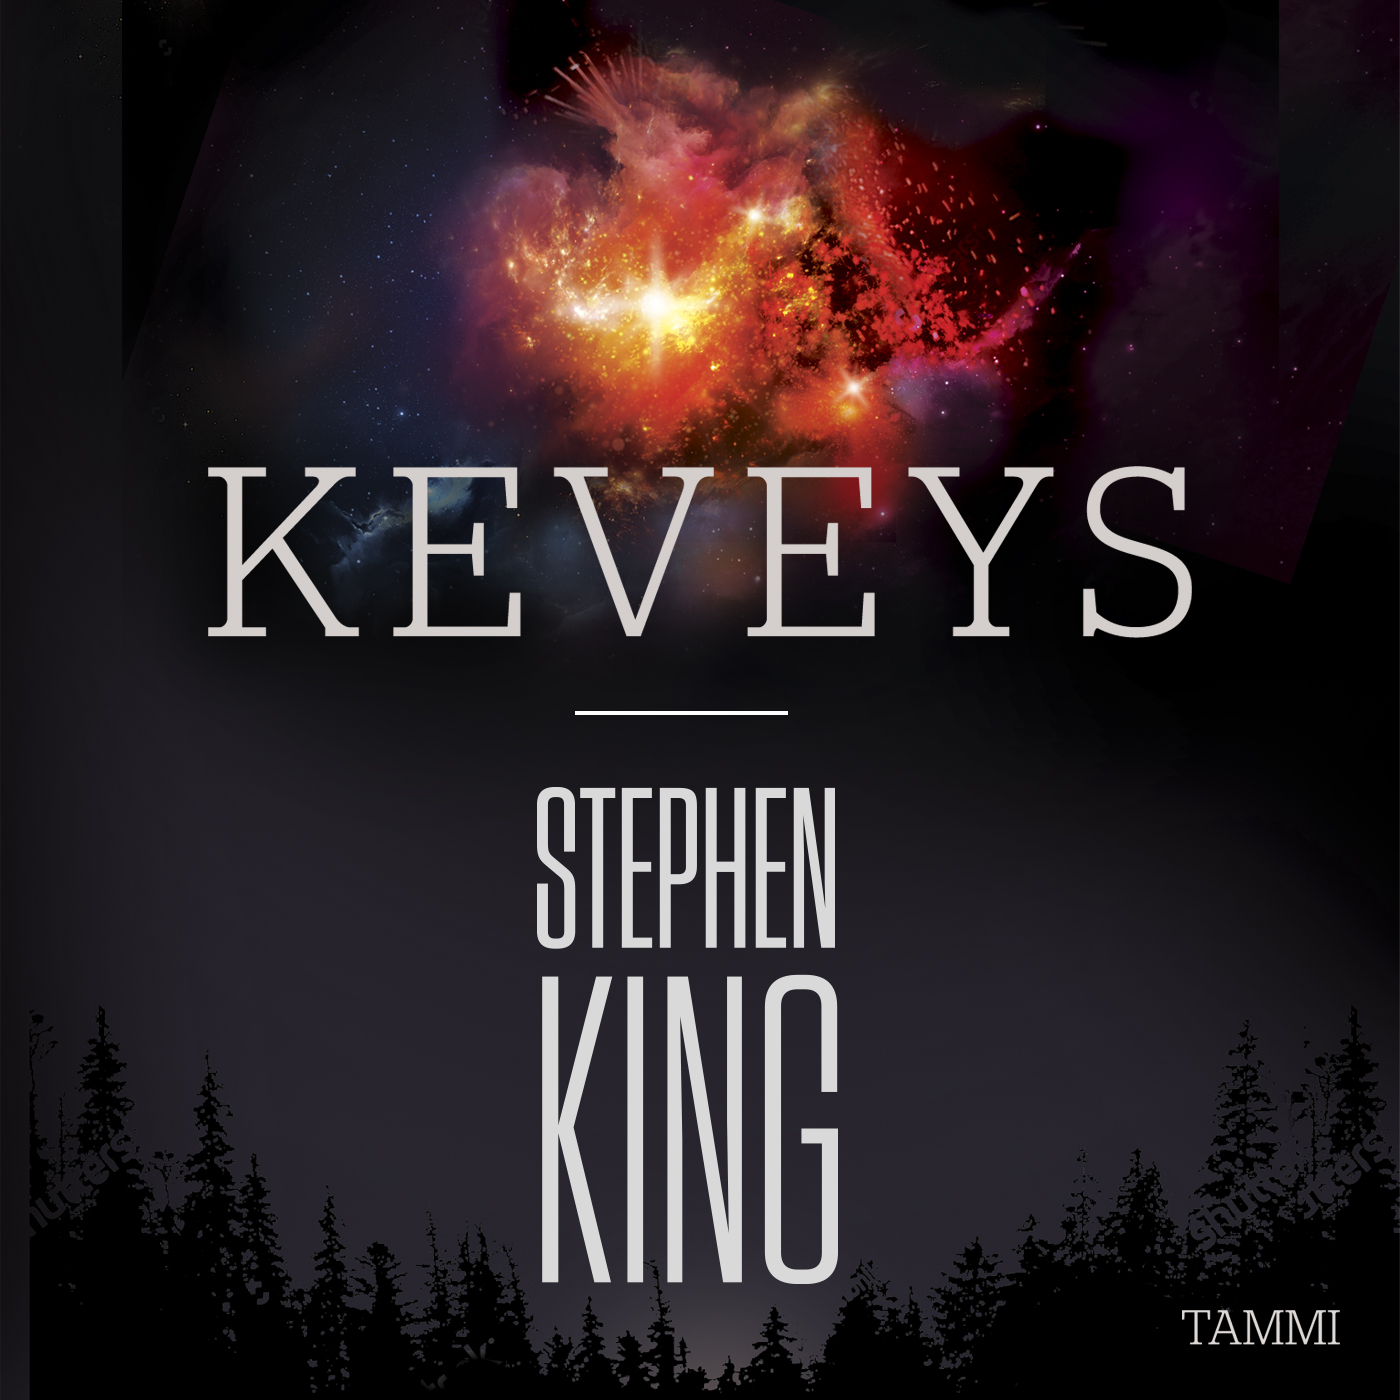 King, Stephen - Keveys, audiobook